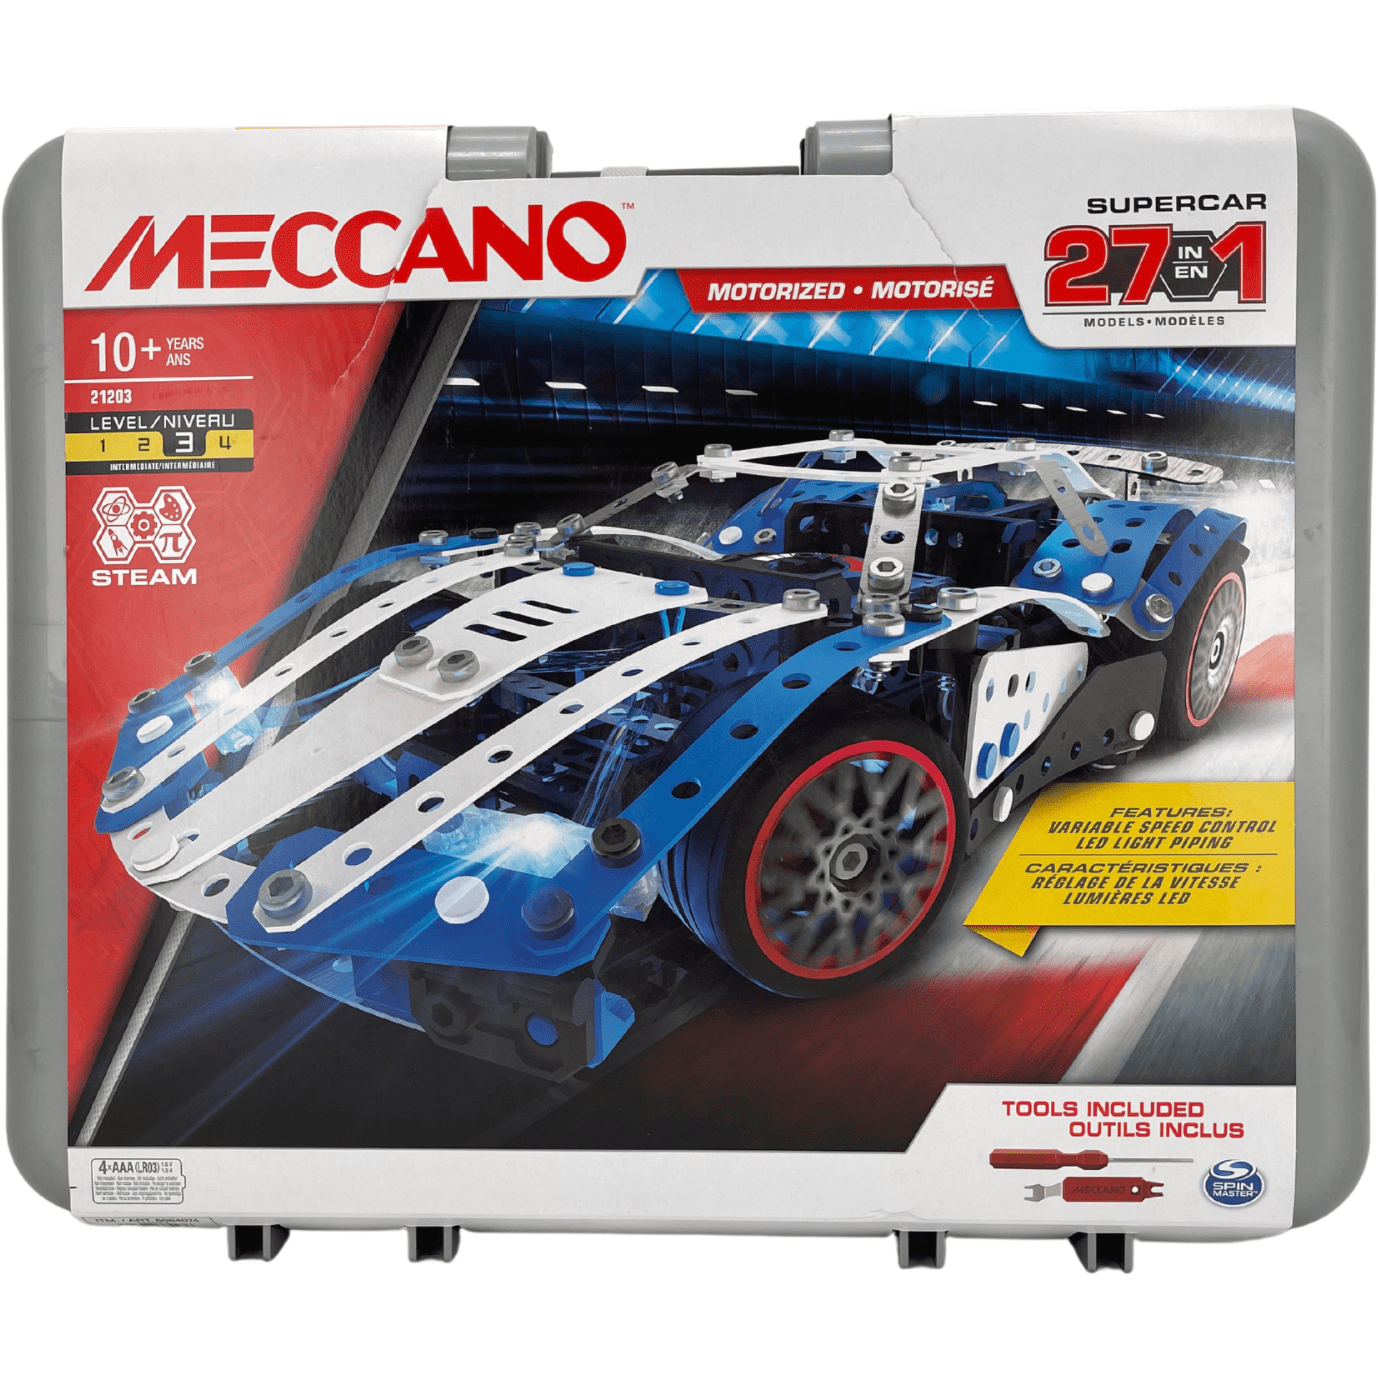 Meccano Supercar Building Model / 21203 / STEAM Toy / Motorized **DEALS**